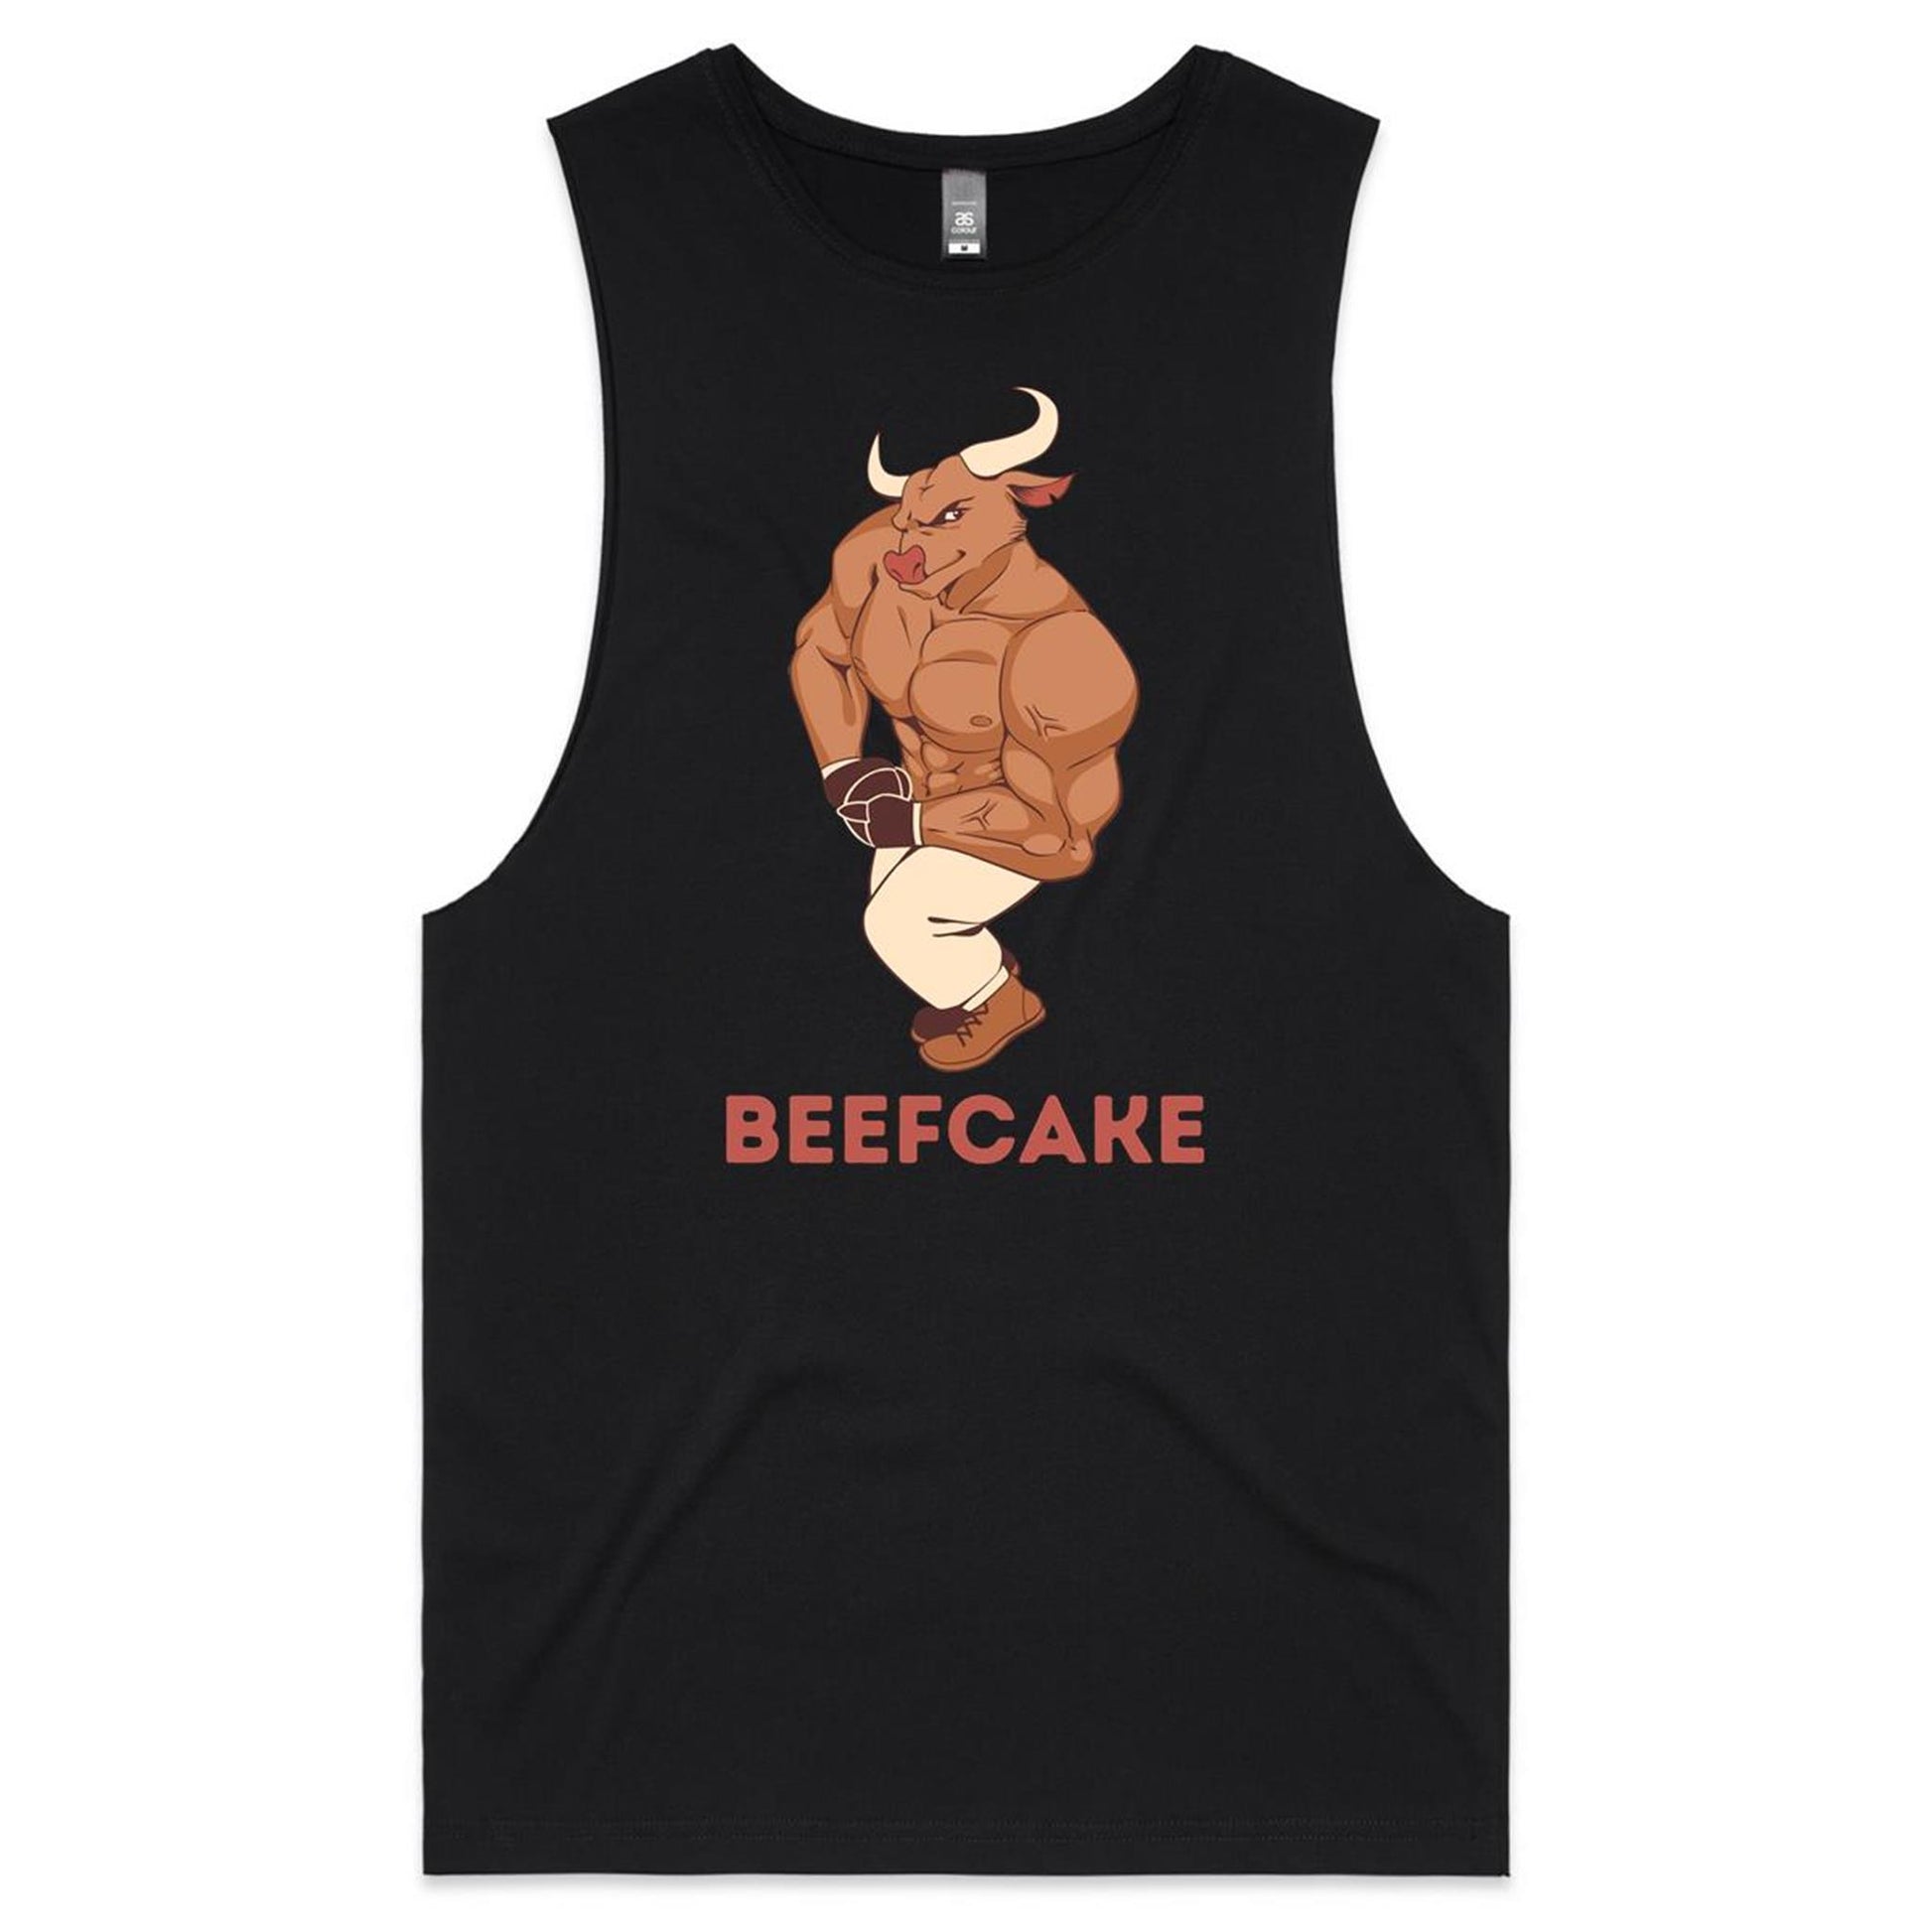 Beefcake, Bull, Gym - Mens Tank Top Tee Black Mens Tank Fitness